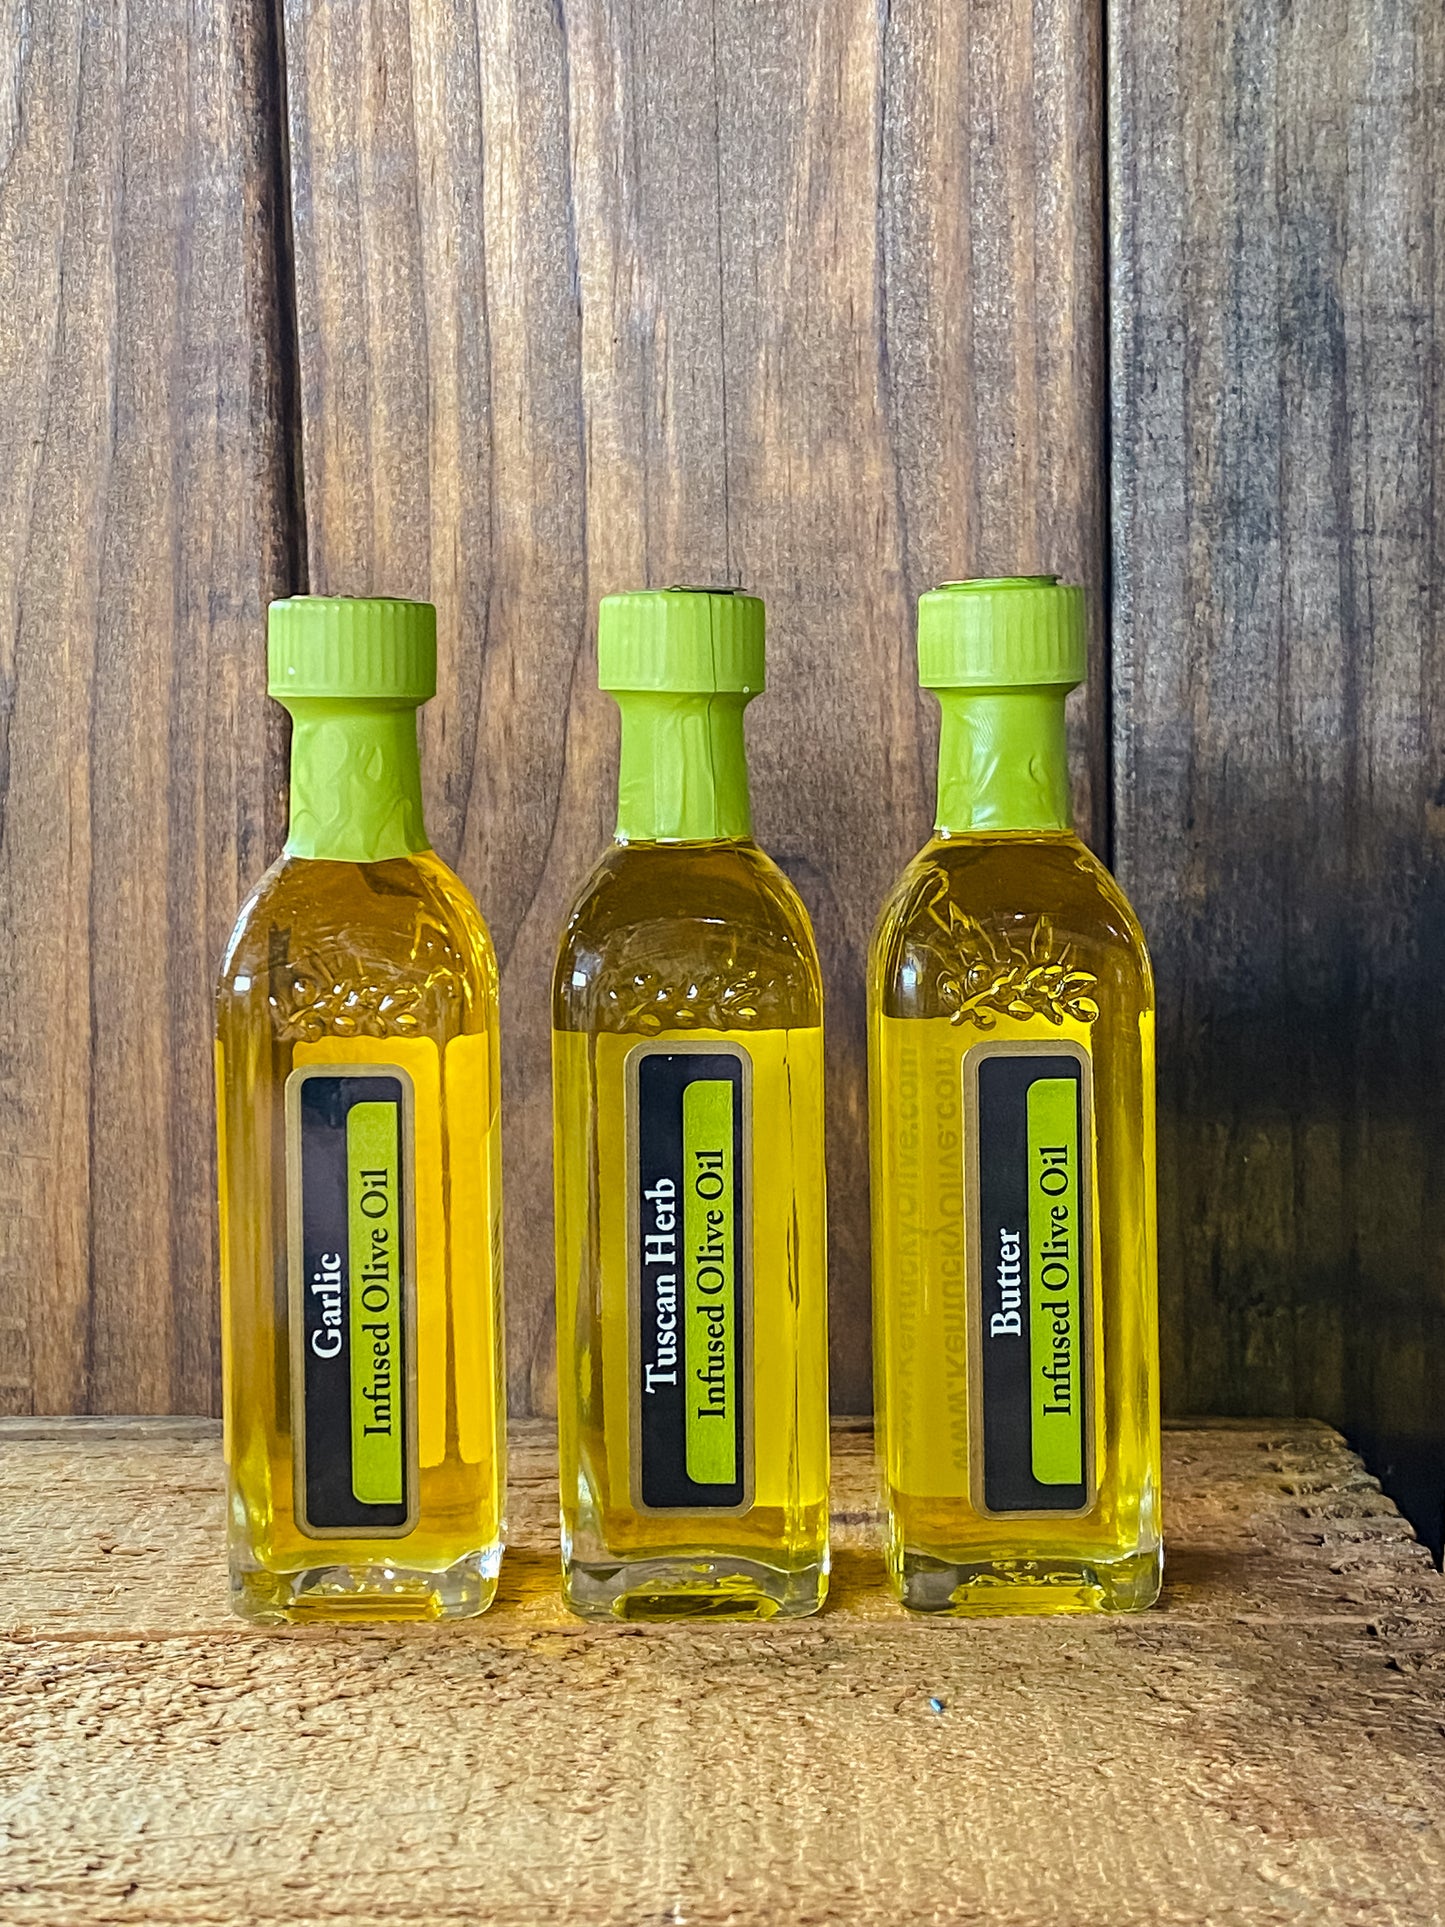 Garlic Infused Olive Oil